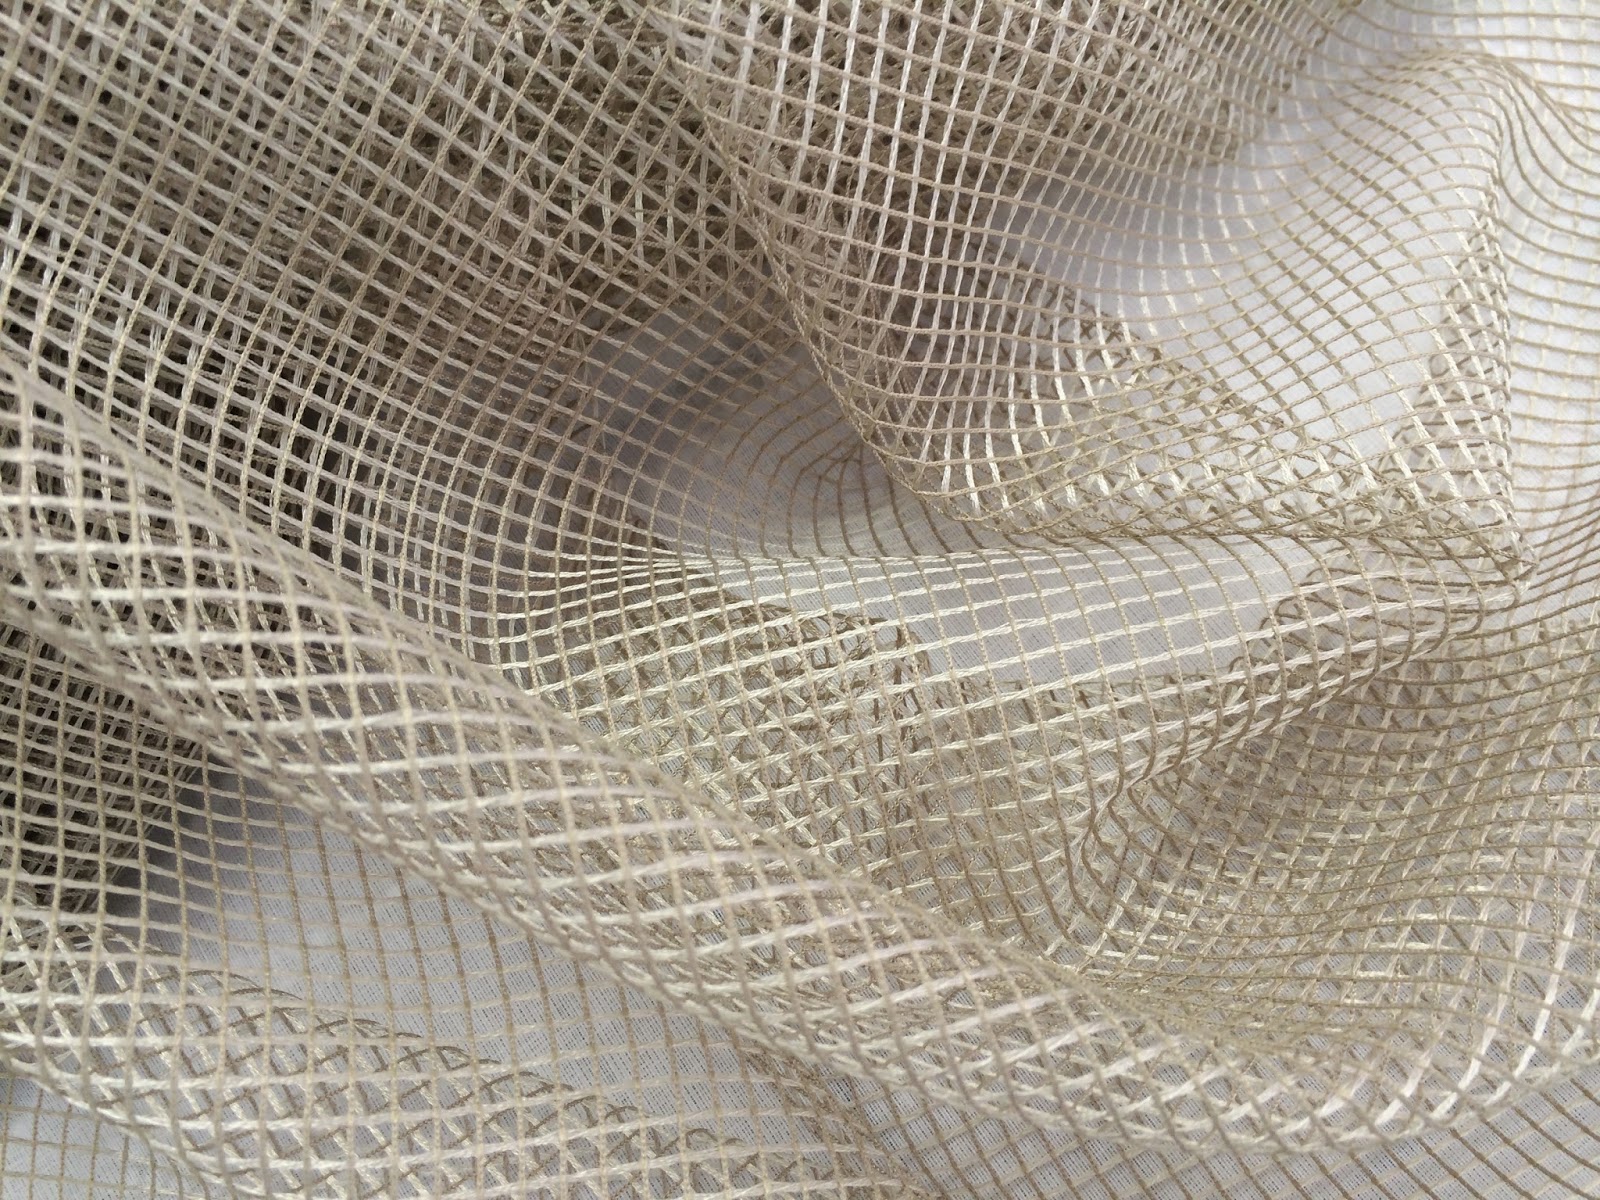 Leatherwood Design Co: Silk mesh drapery